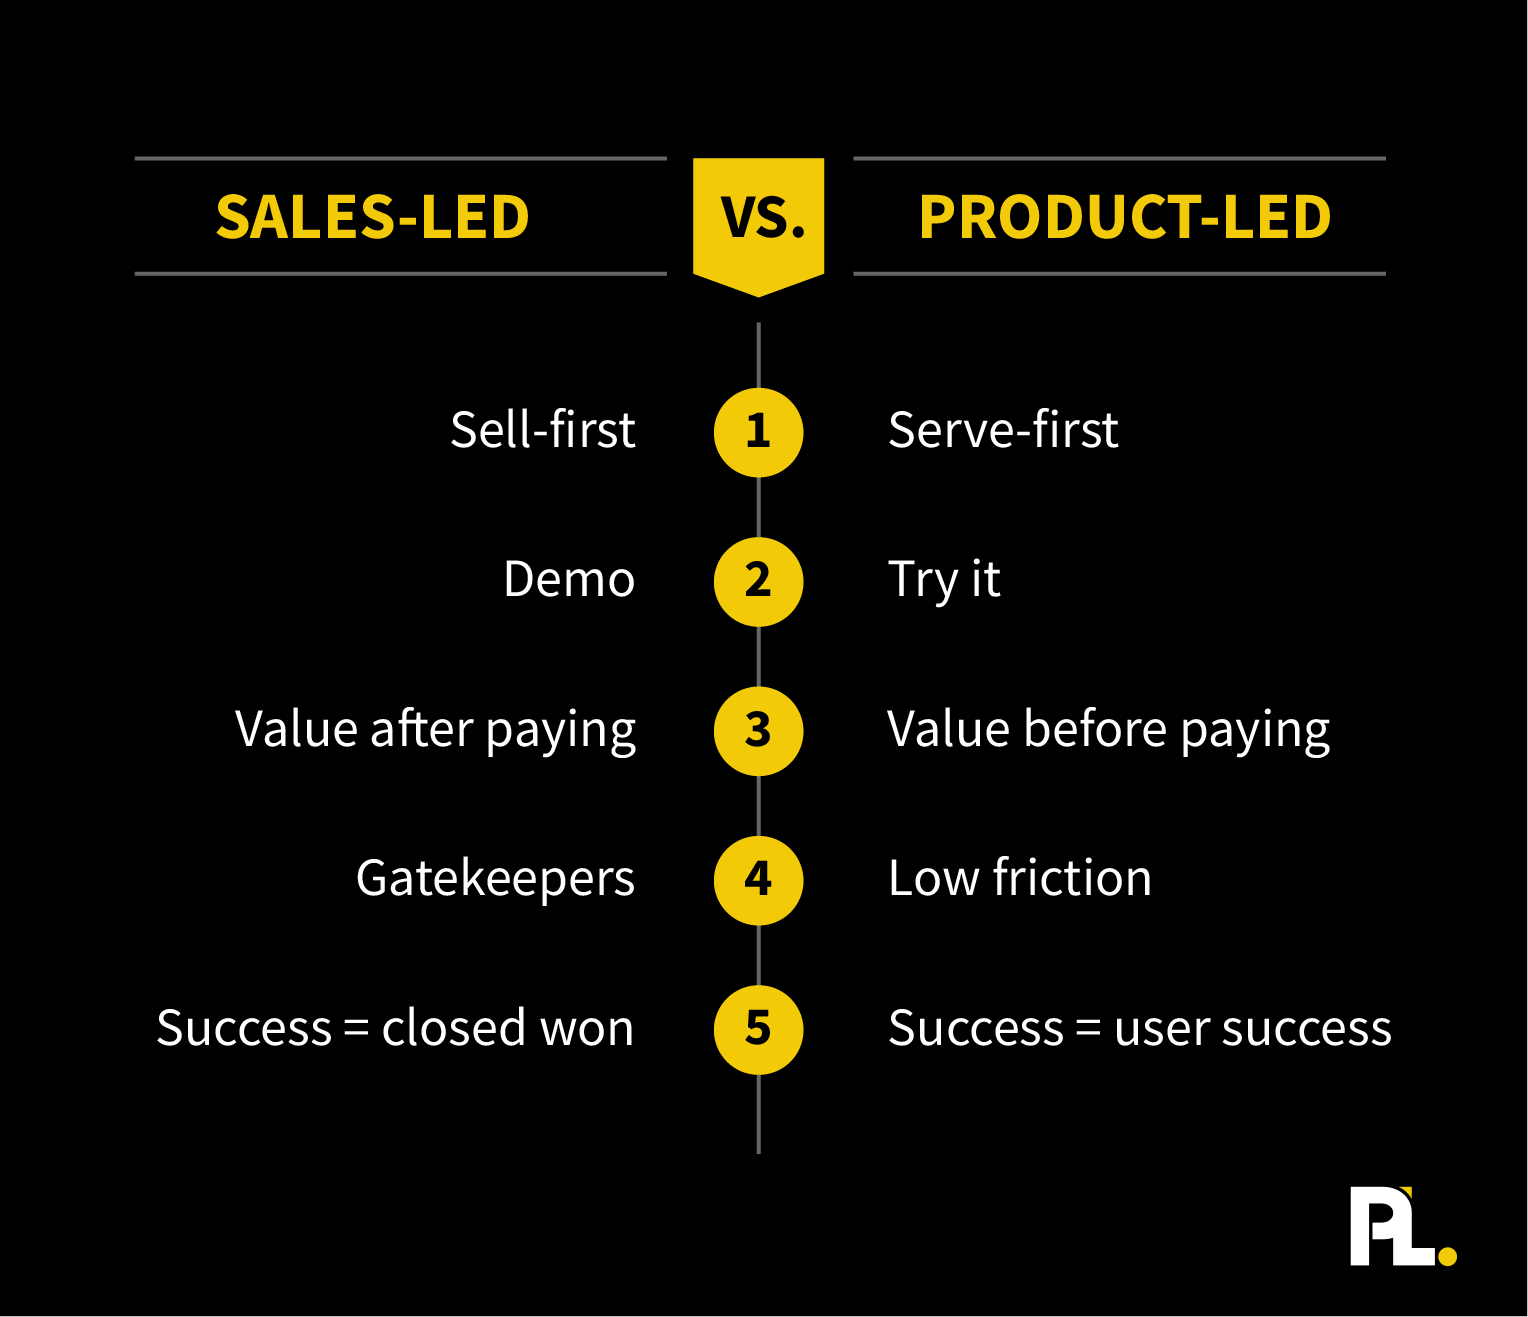 Sales-led vs Product-led characteristics